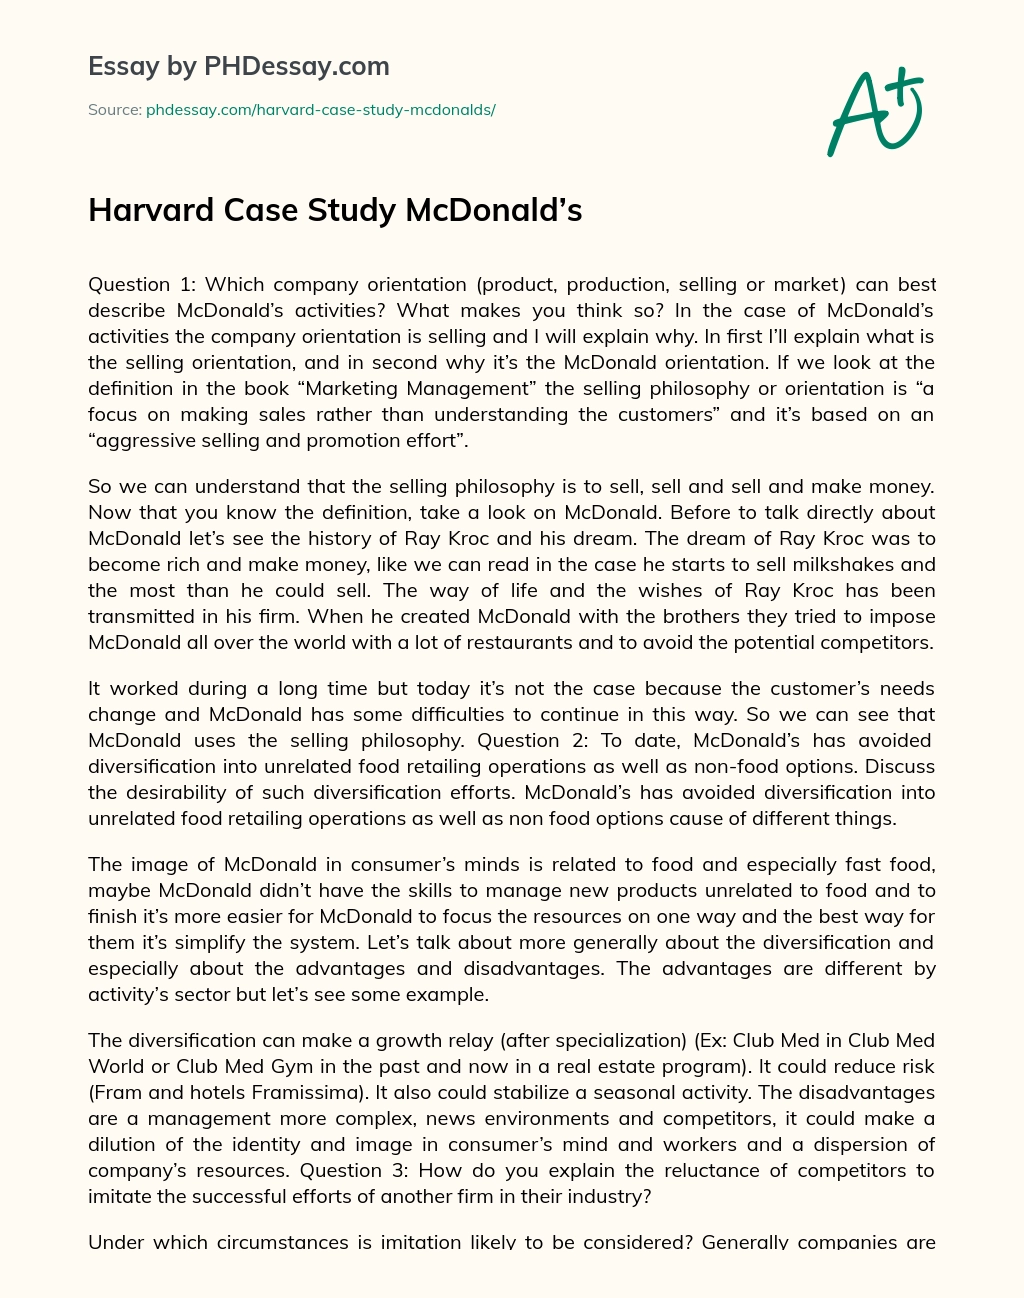 Harvard Case Study McDonald’s essay